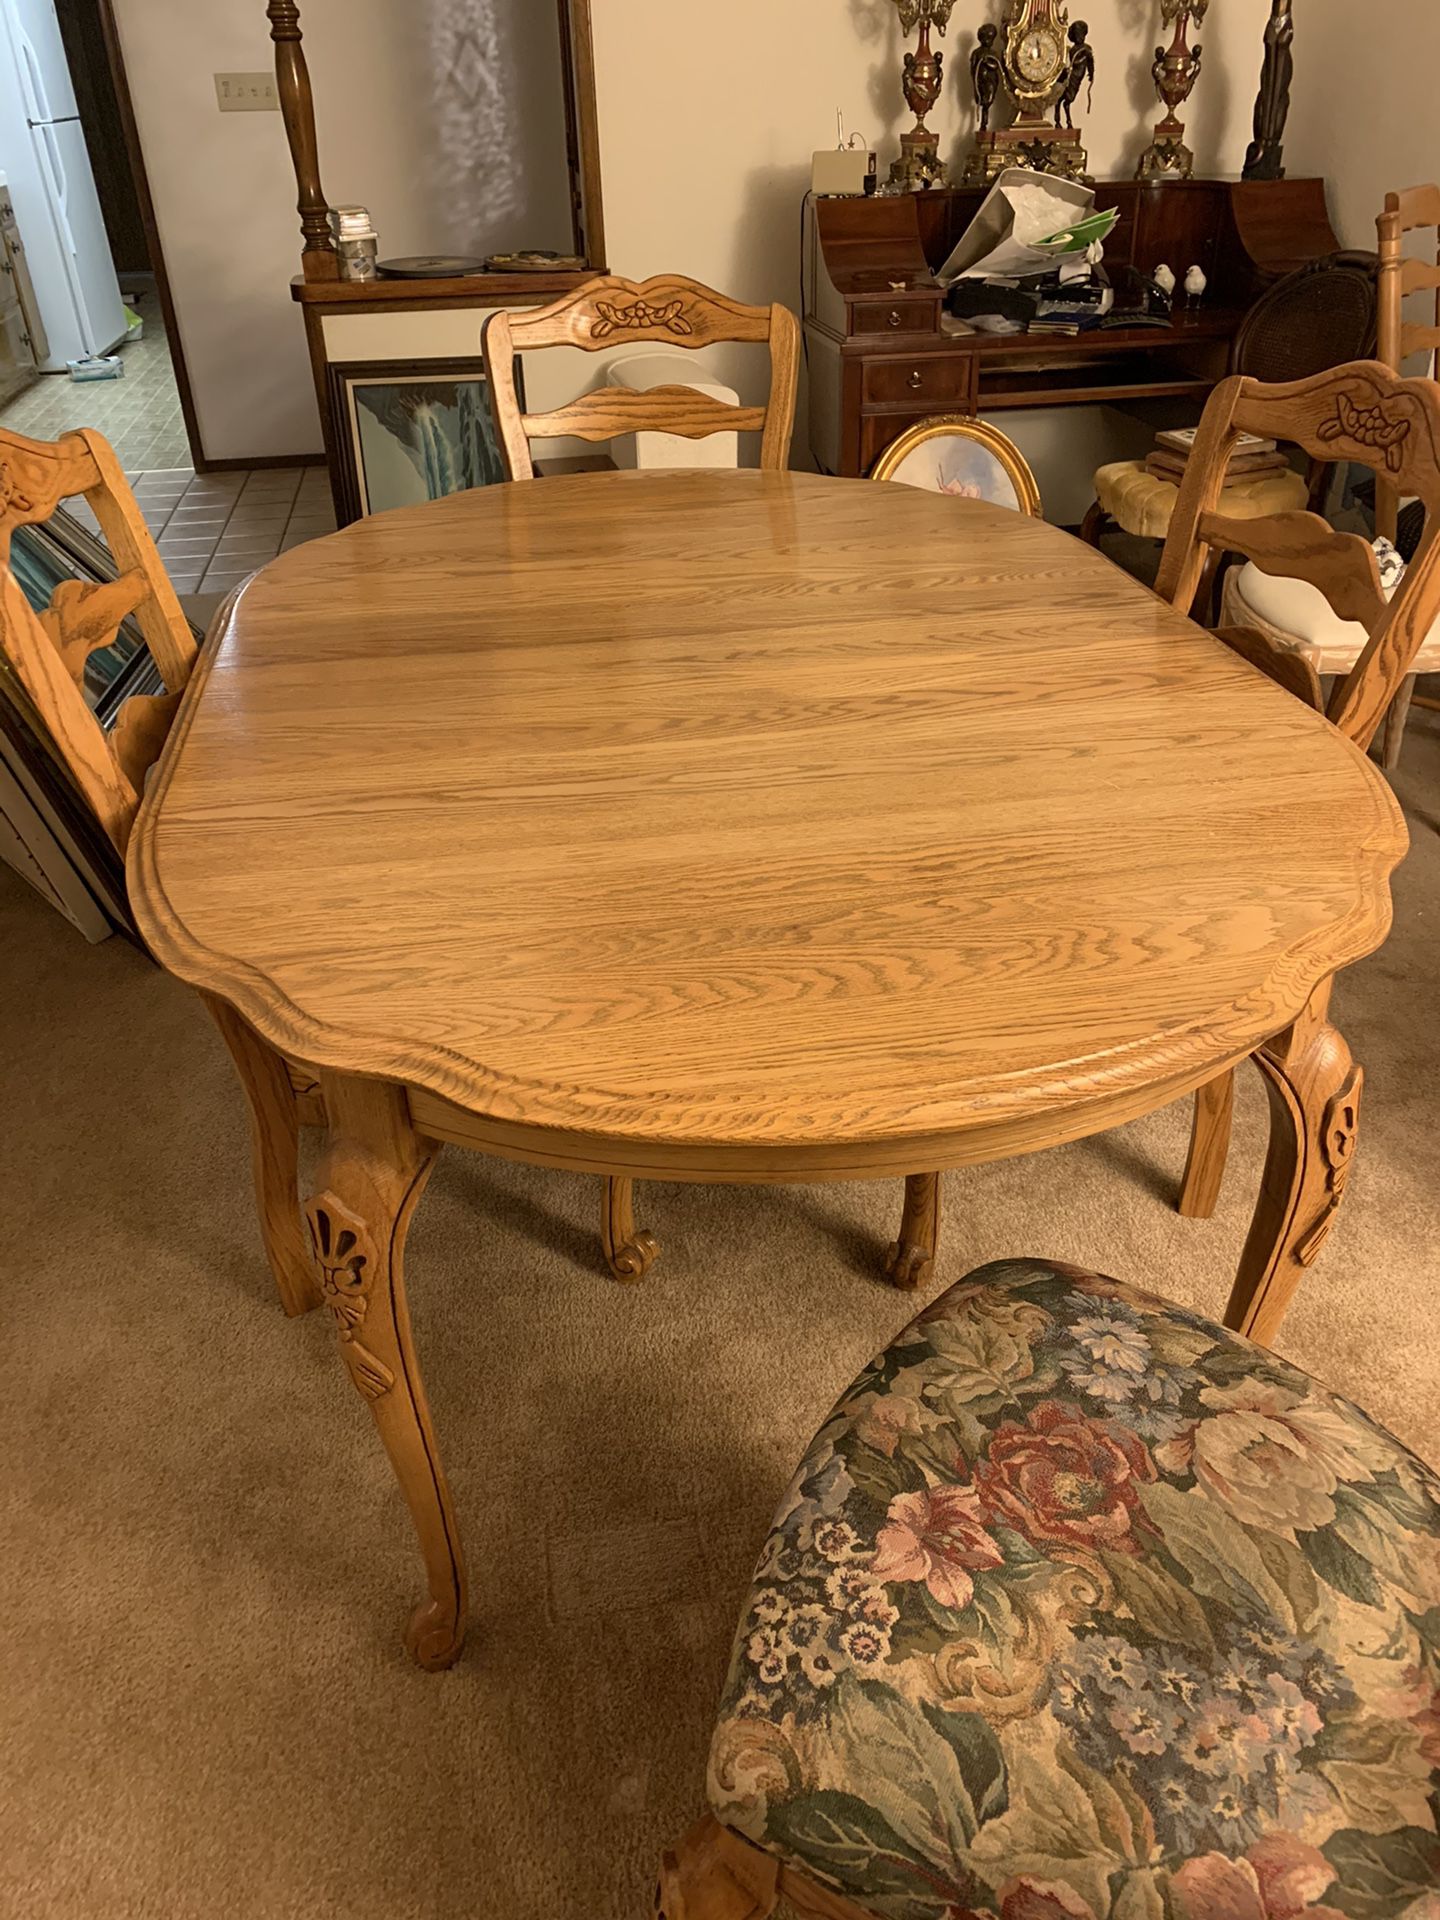 Solid oak kitchen table